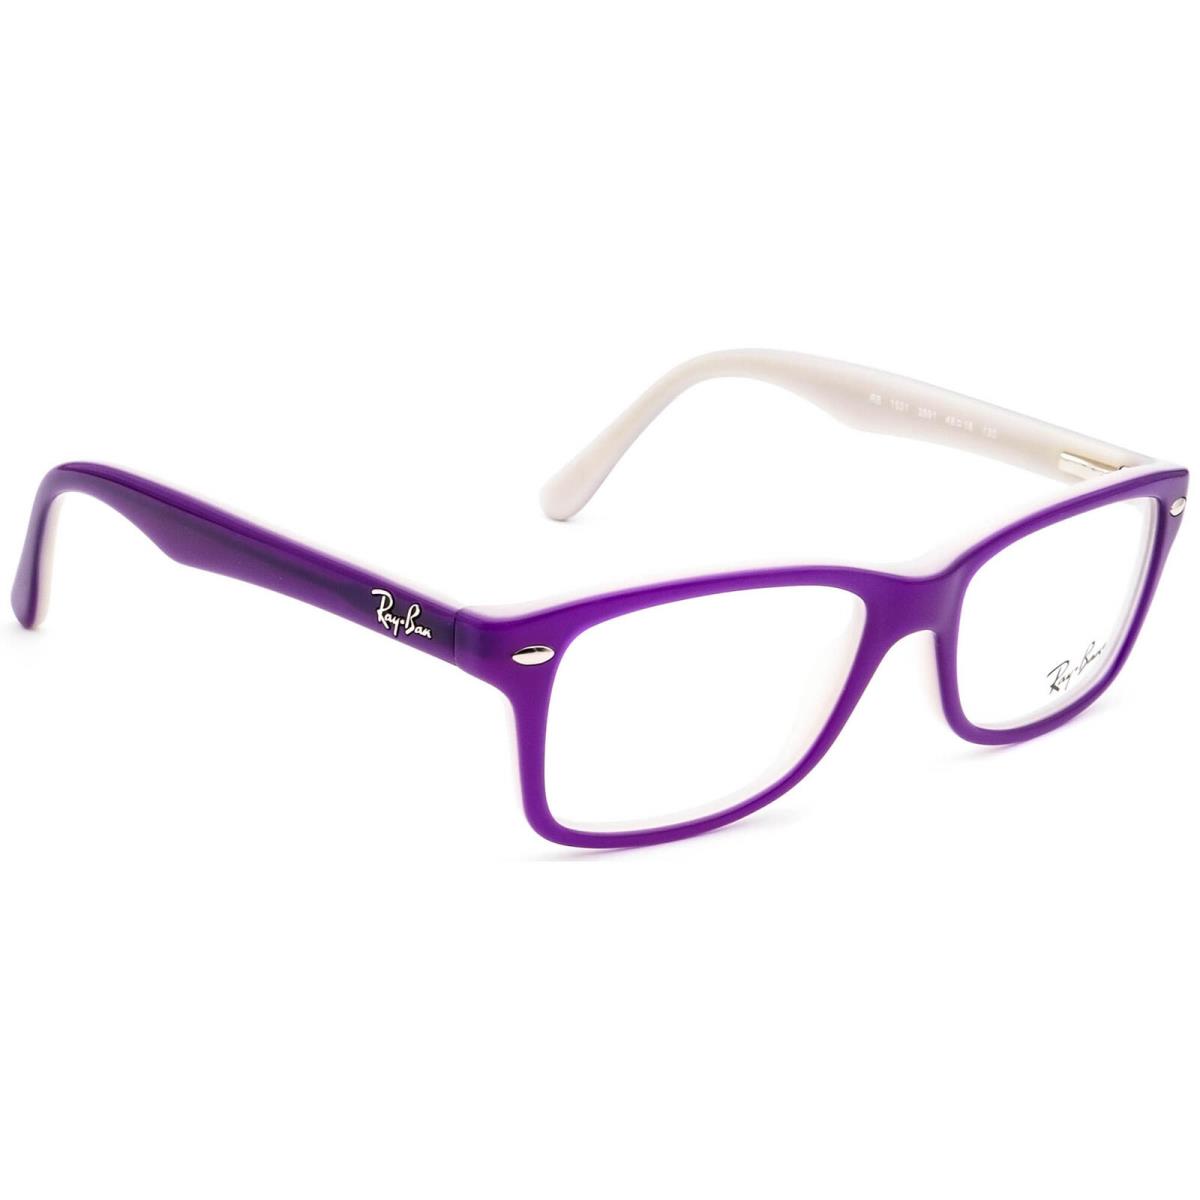 Ray-ban Small Eyeglasses RB 1531 3591 Junior Purple on White Horn Rim 48 16 130